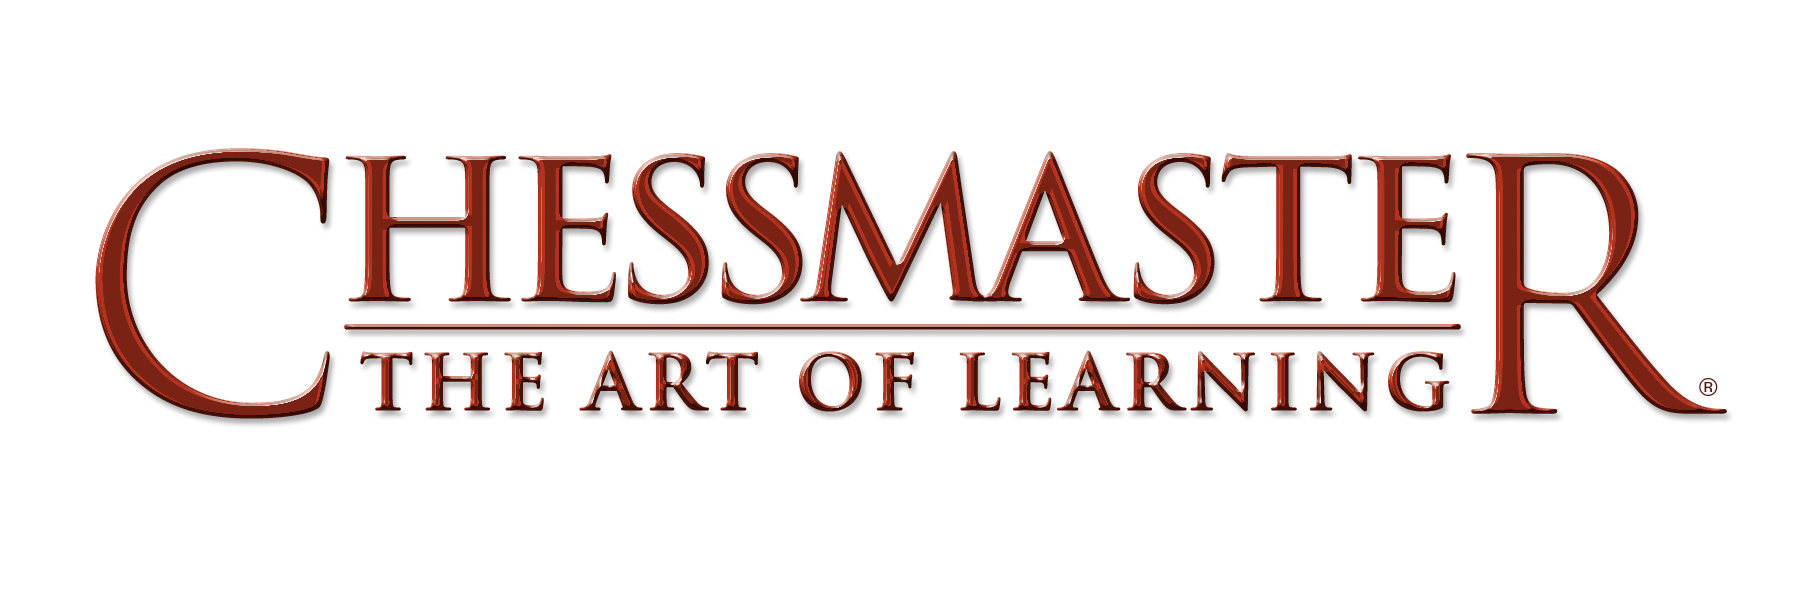 Chessmaster: The Art of Learning